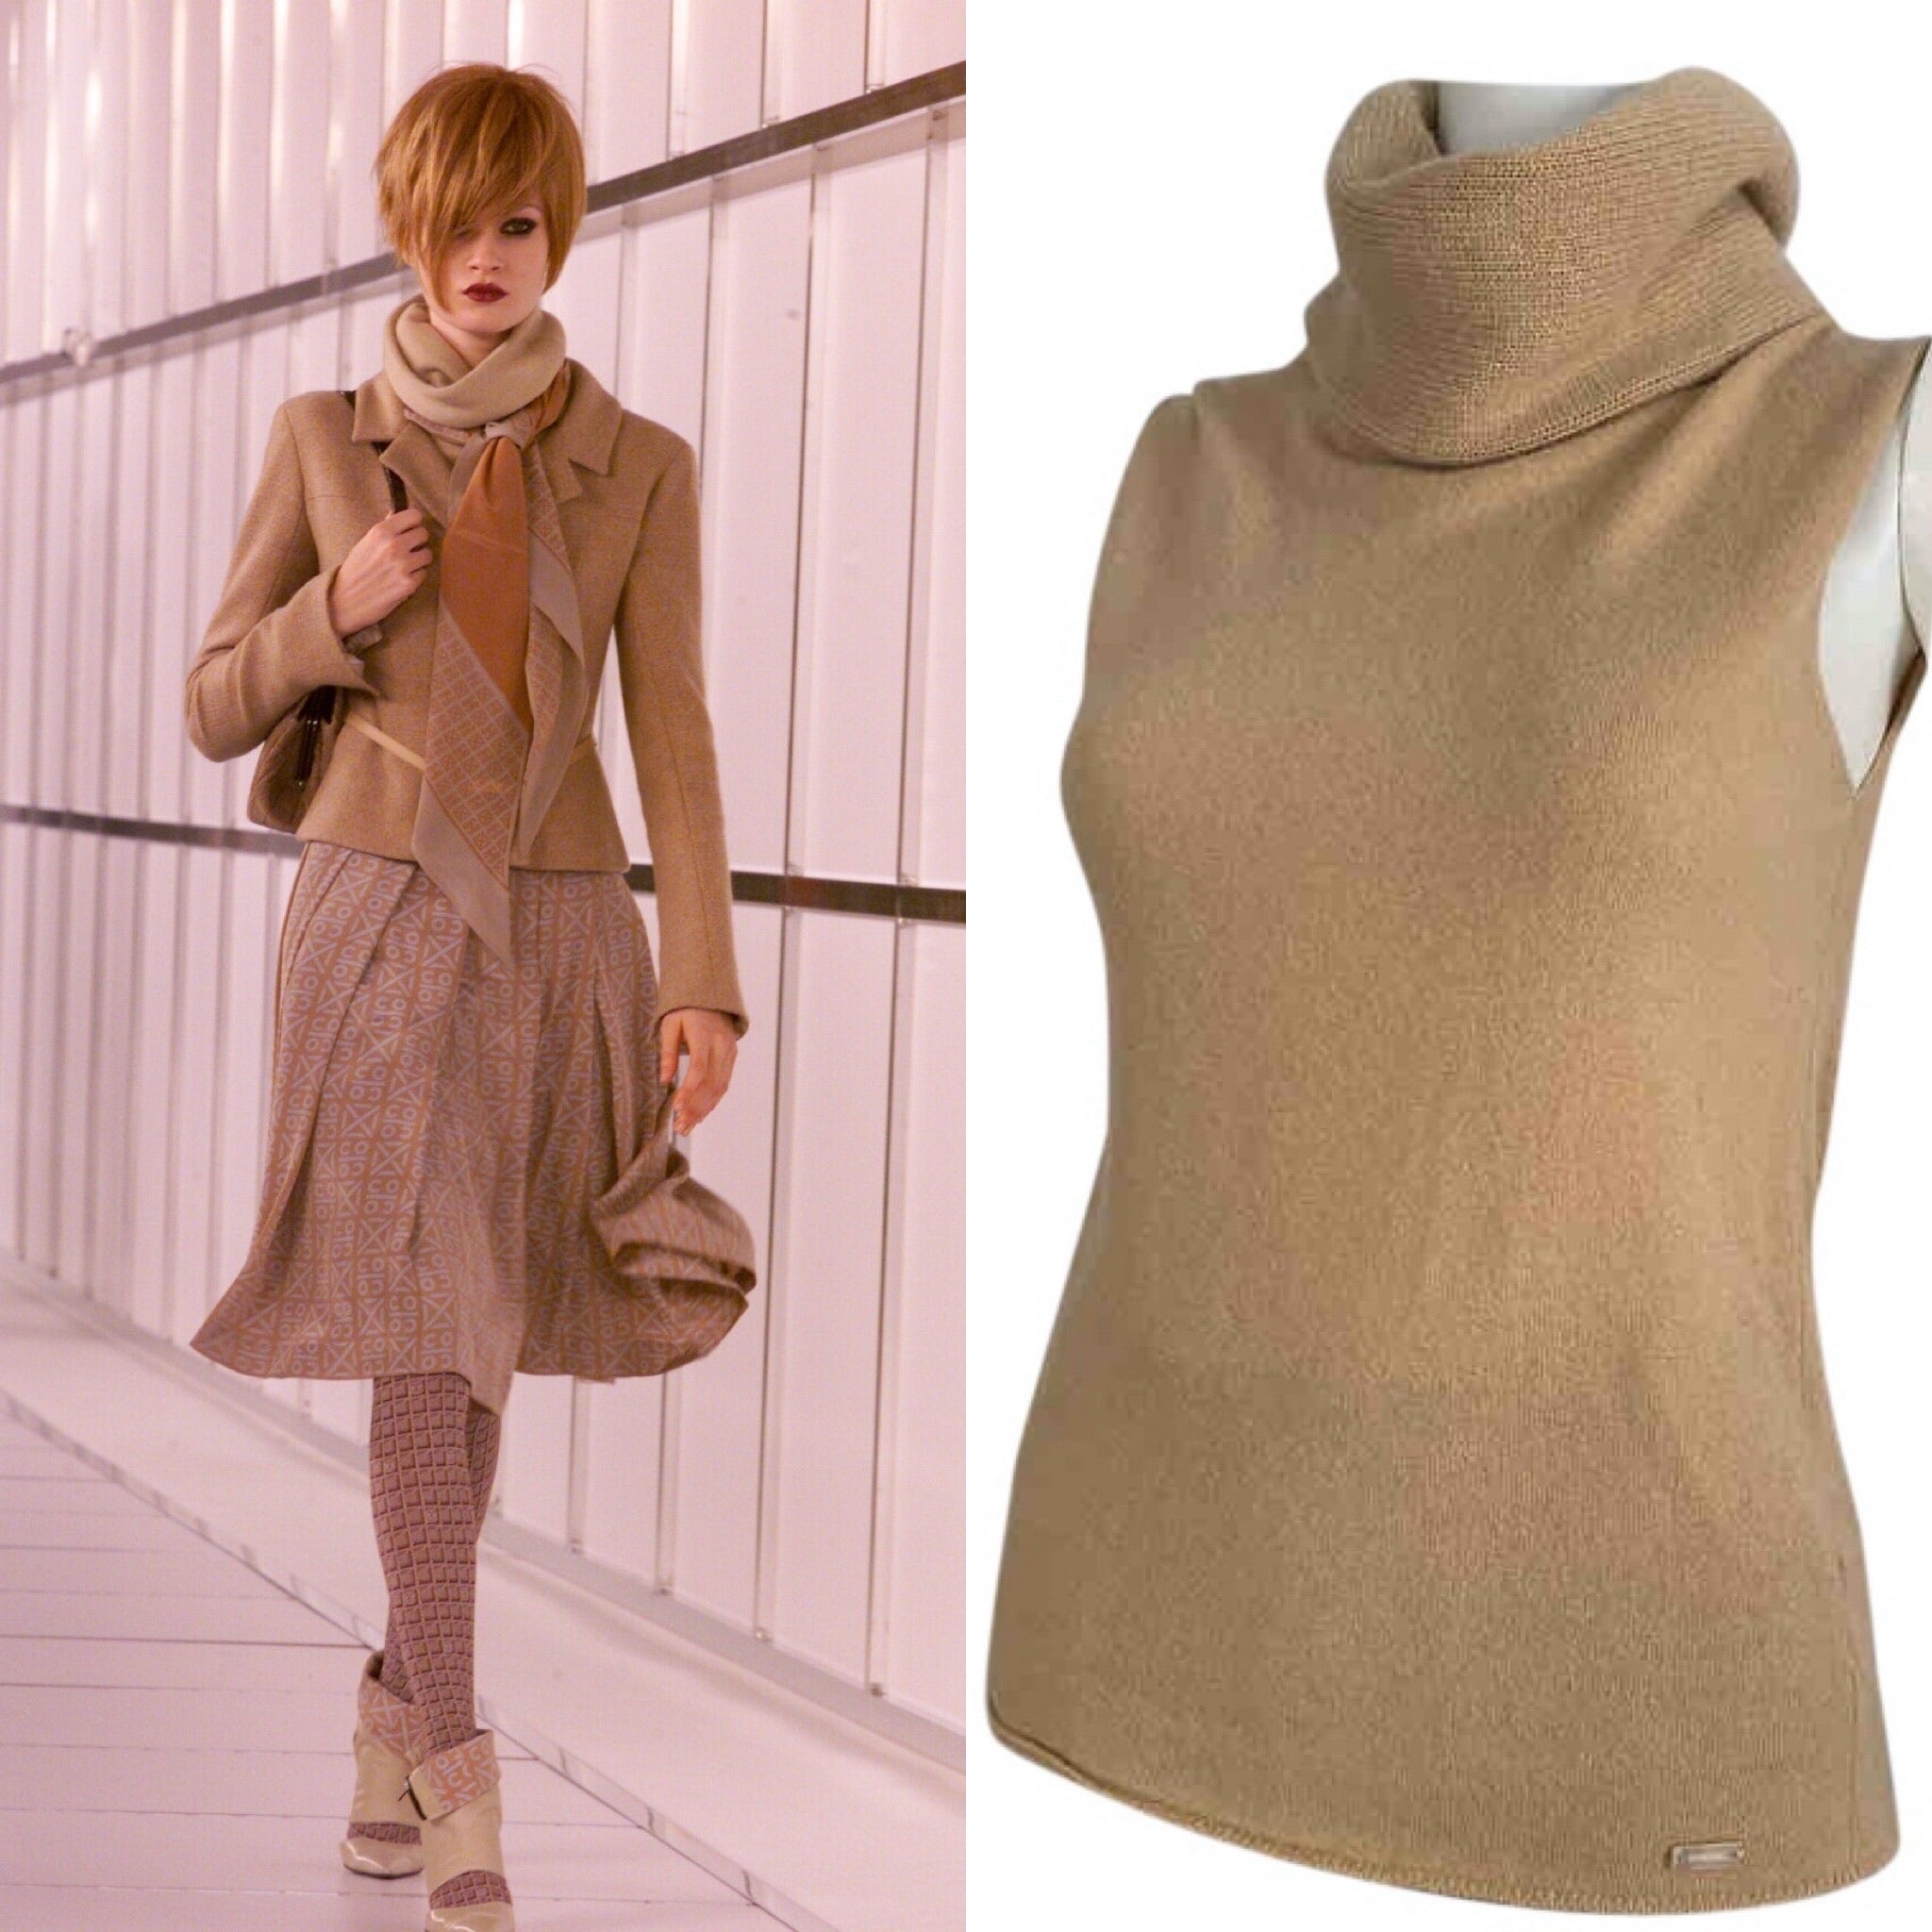 HelensChanel Chanel 00A 2000 Fall Light Brown Beige Turtleneck Sweater Blouse FR 40 US 4/6